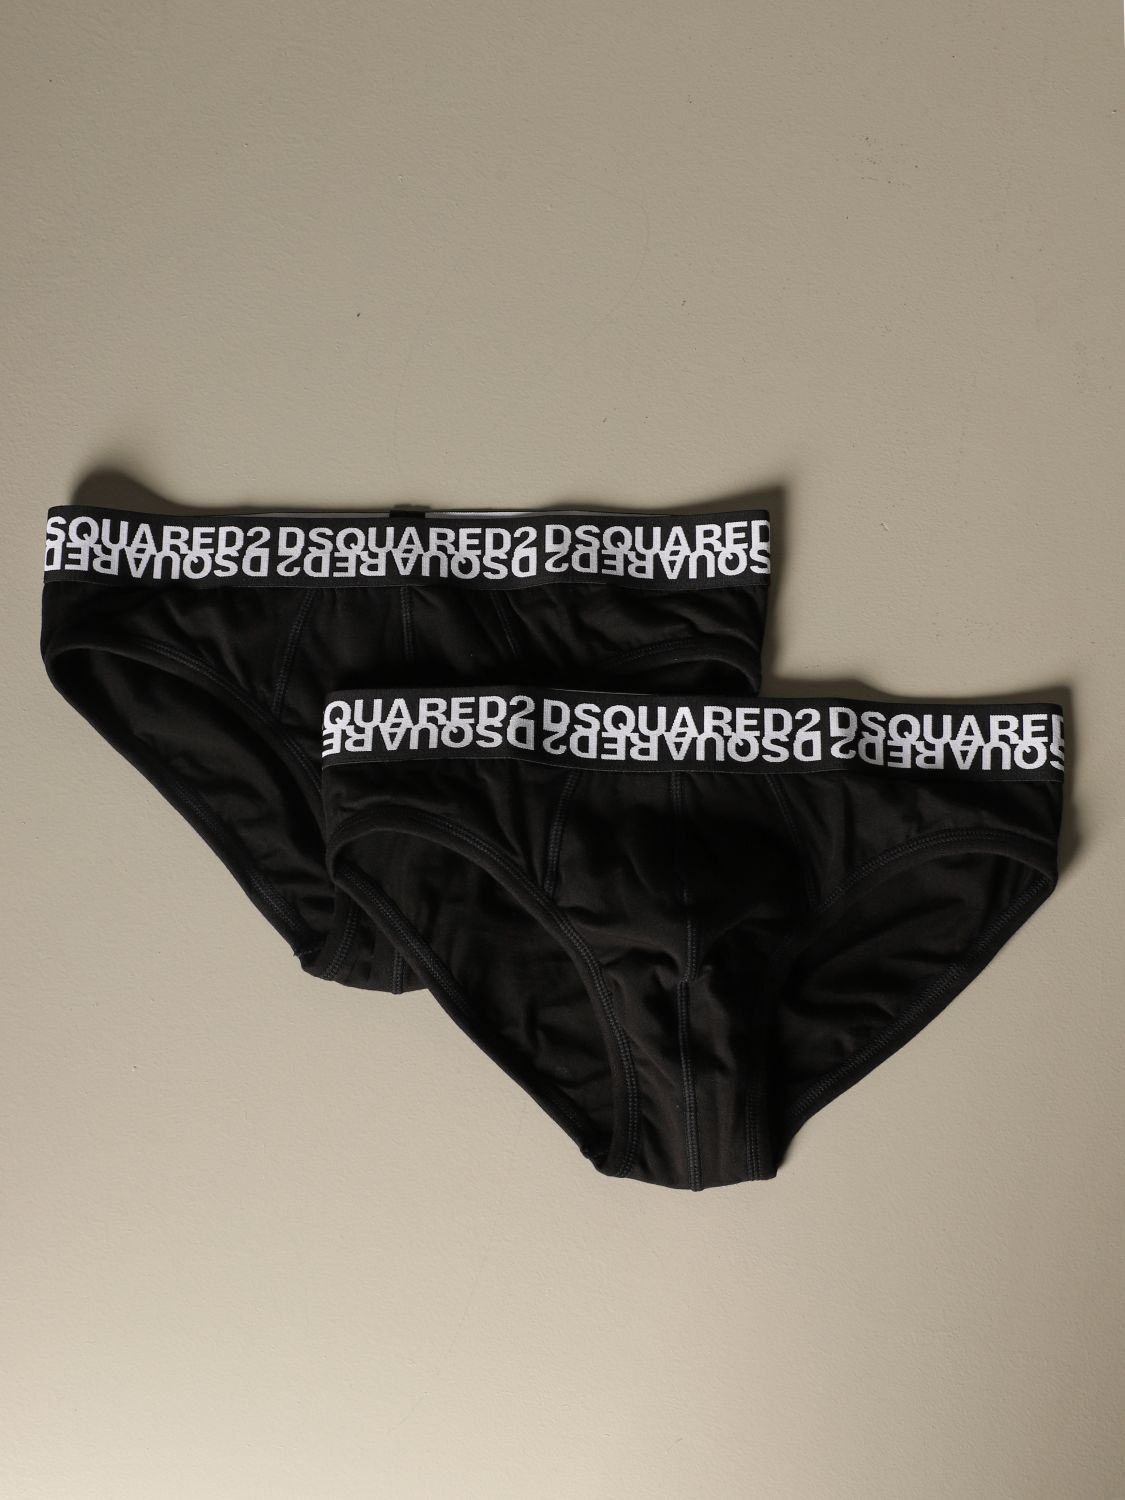 dsquared underwear uk